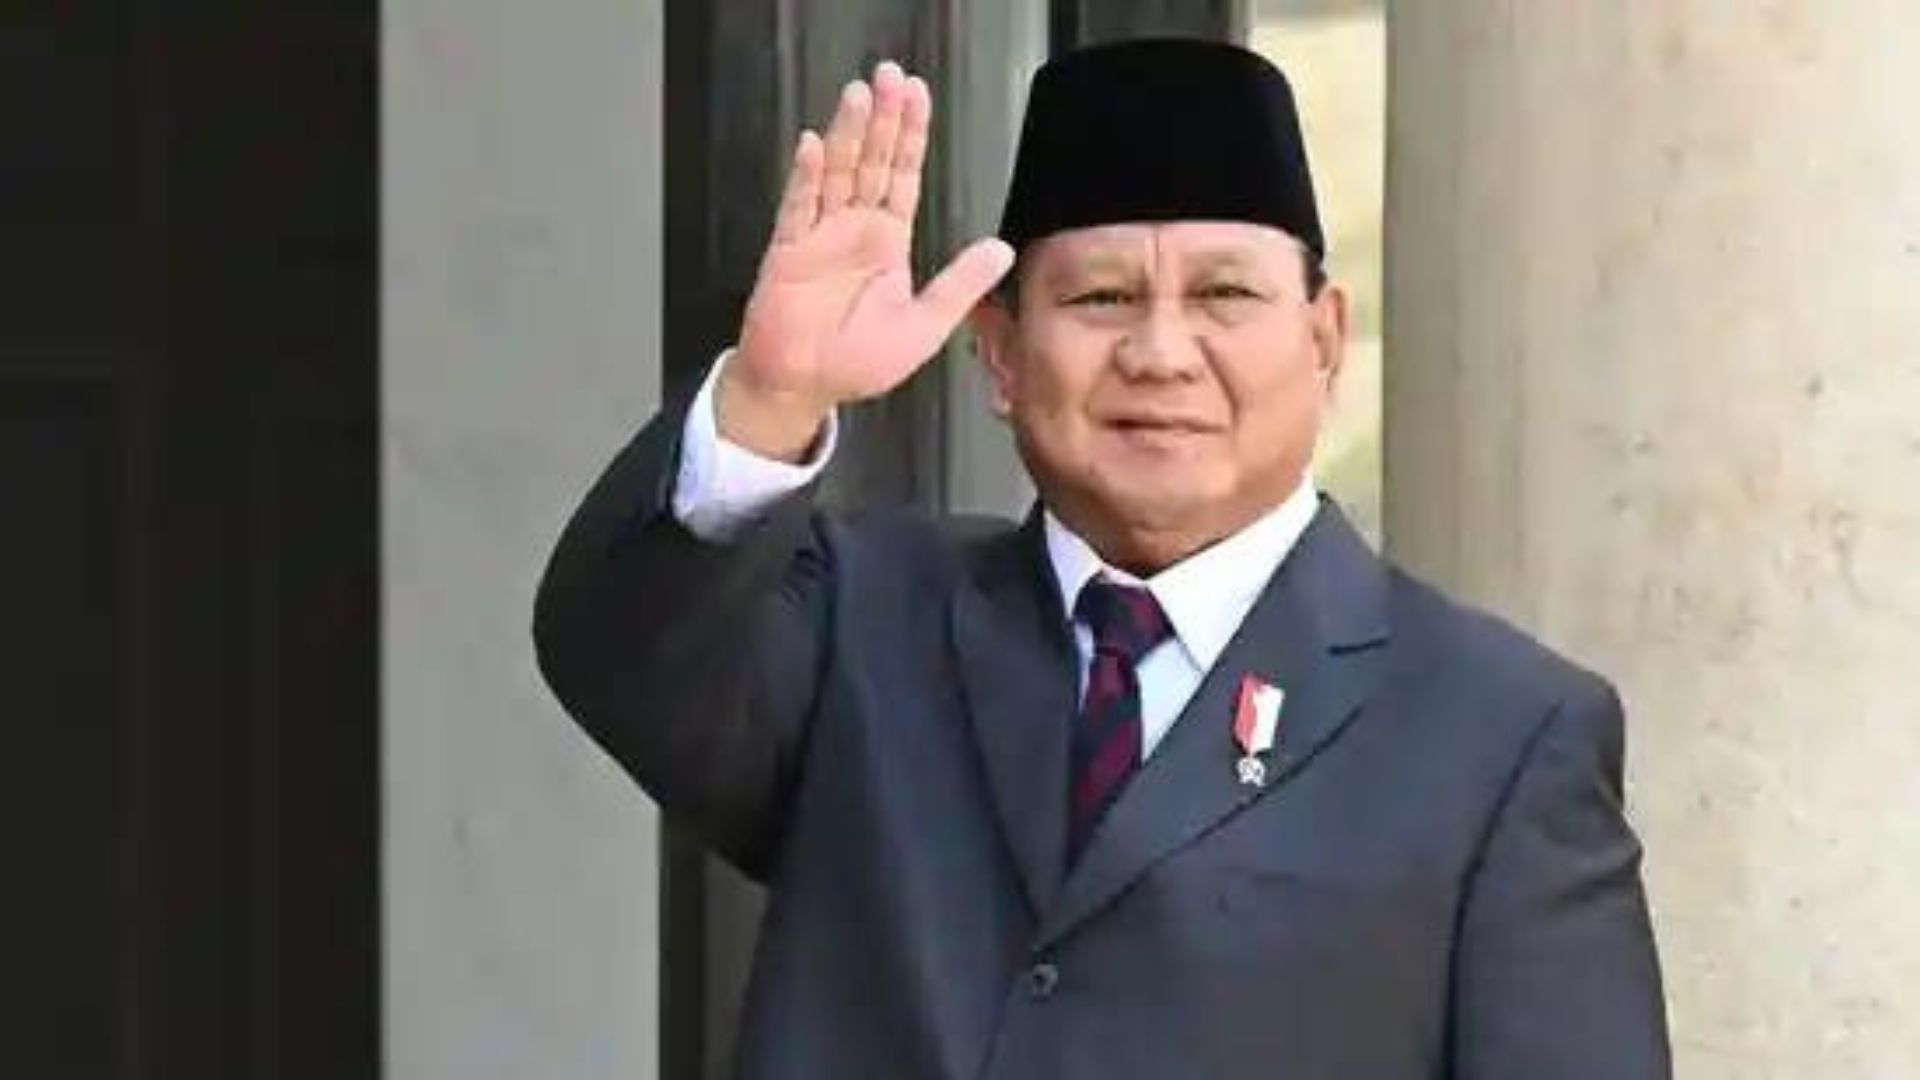 Prabowo Subianto Elected as Indonesia’s President